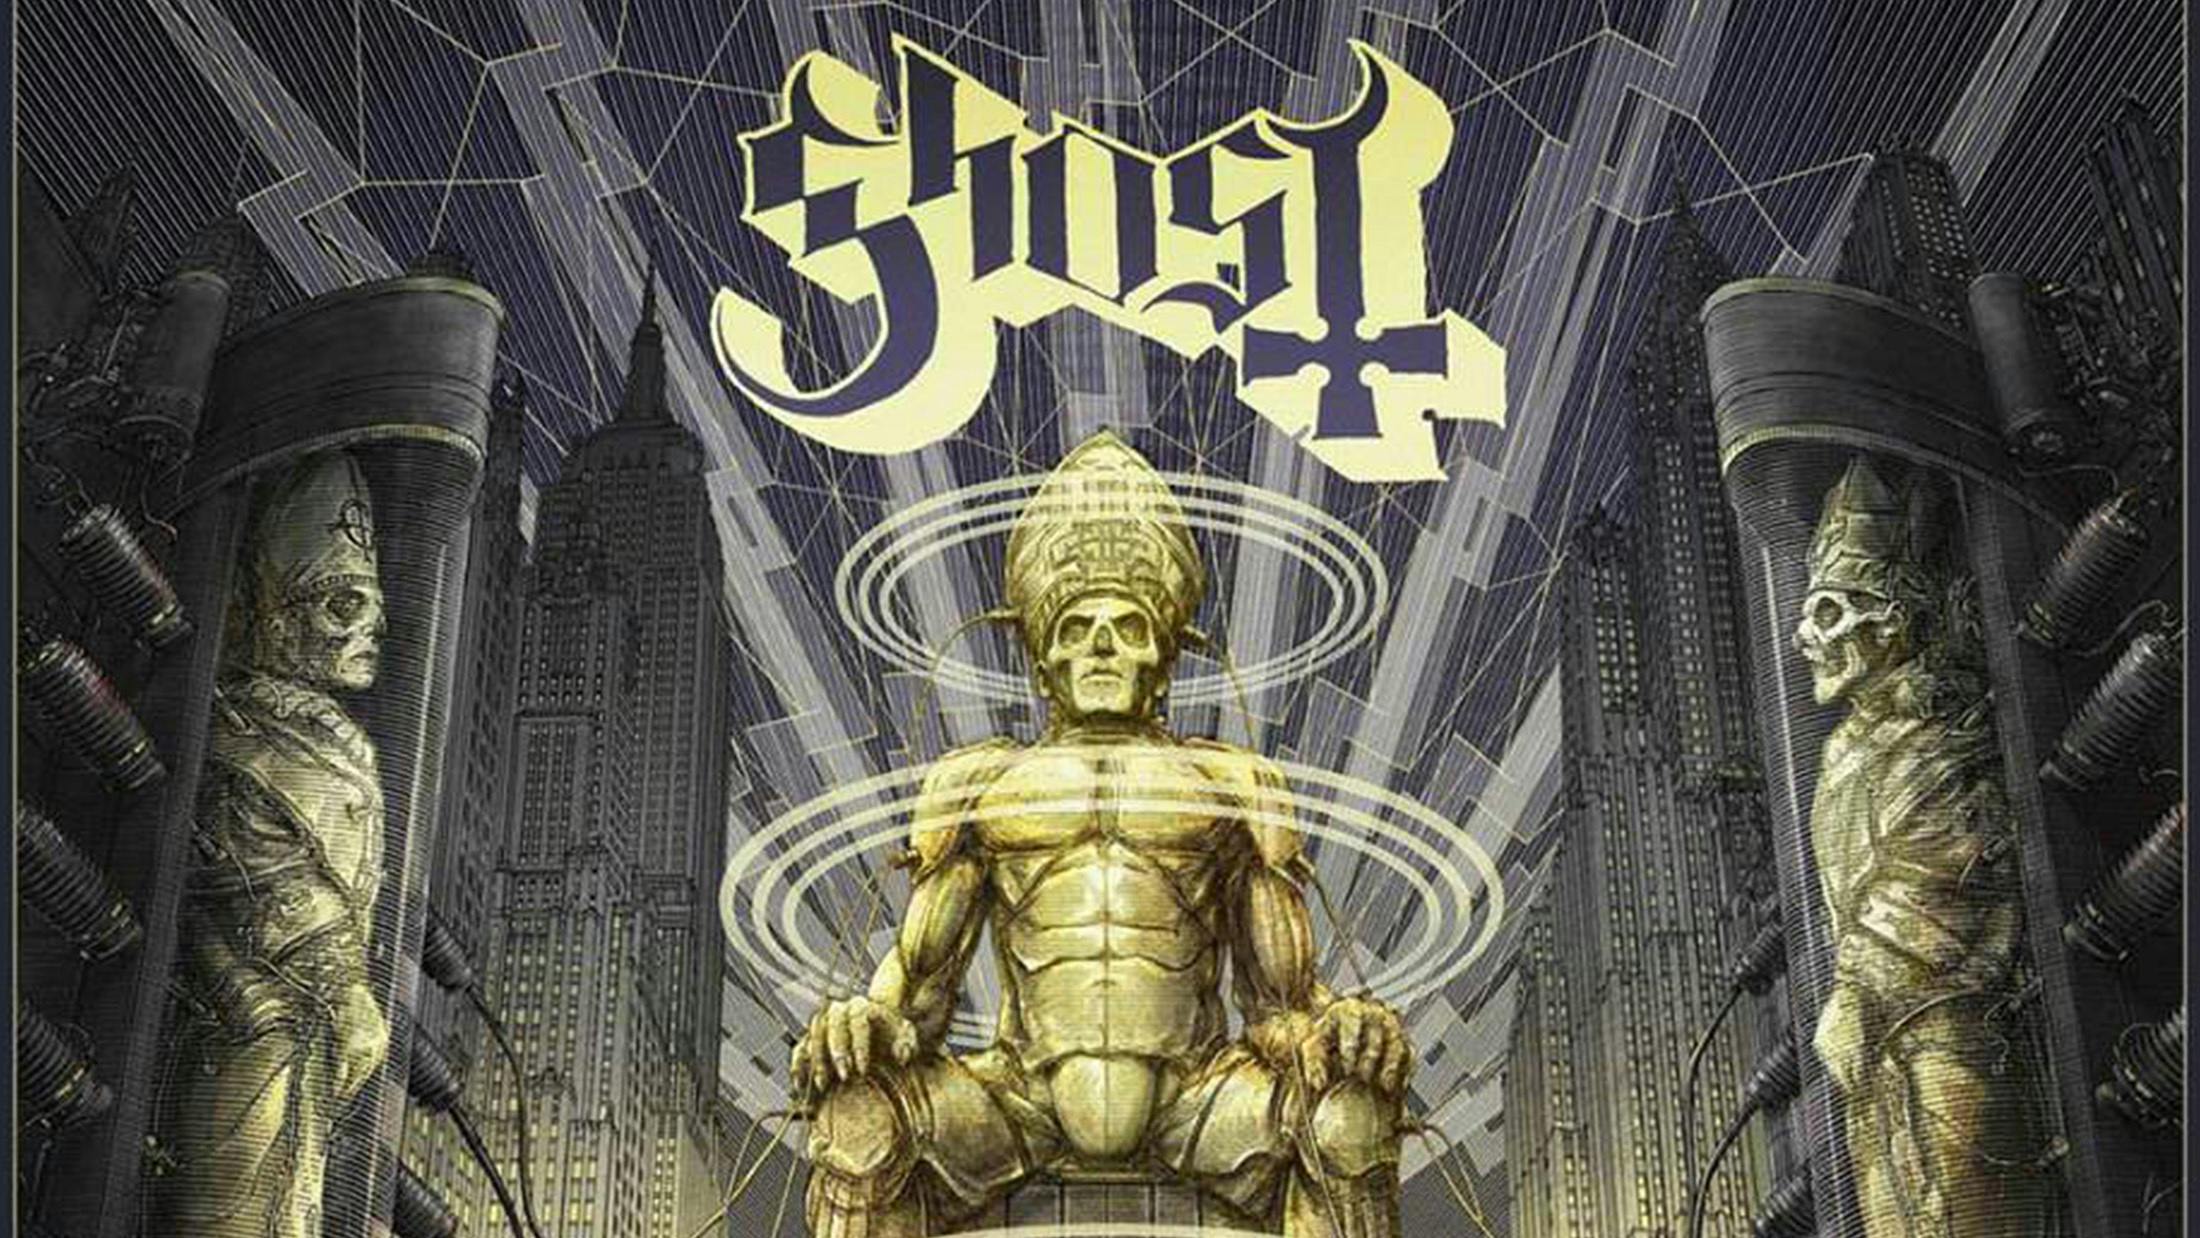 Ghost Tease Live Album Cover Art